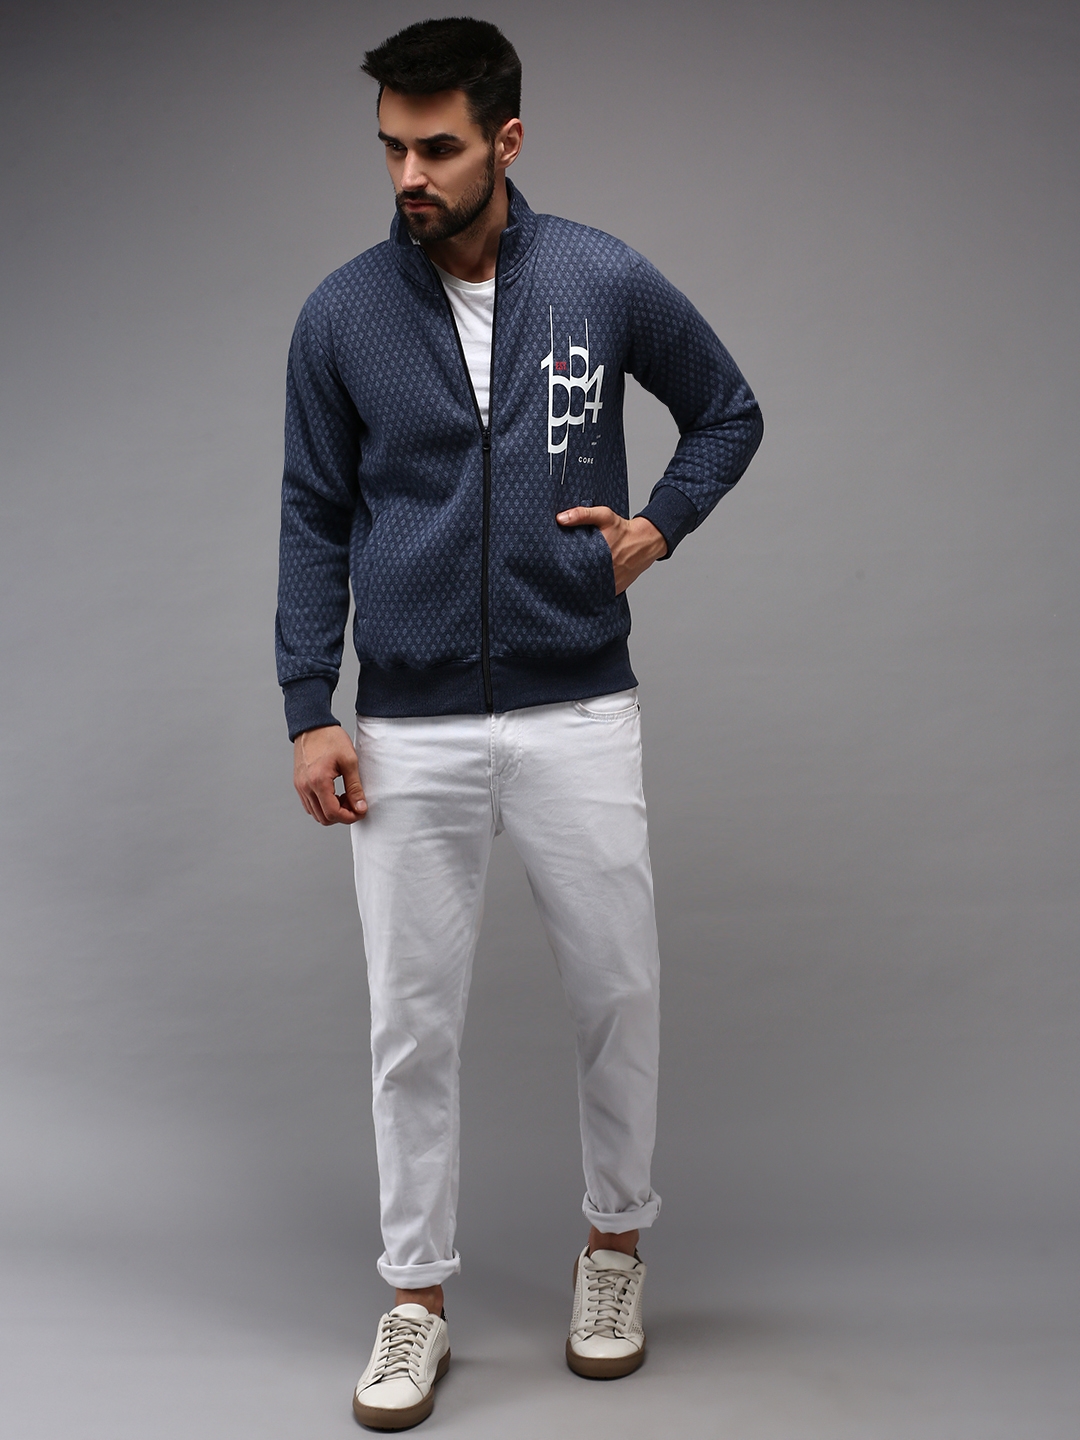 Men's Blue Cotton Printed Activewear Jackets